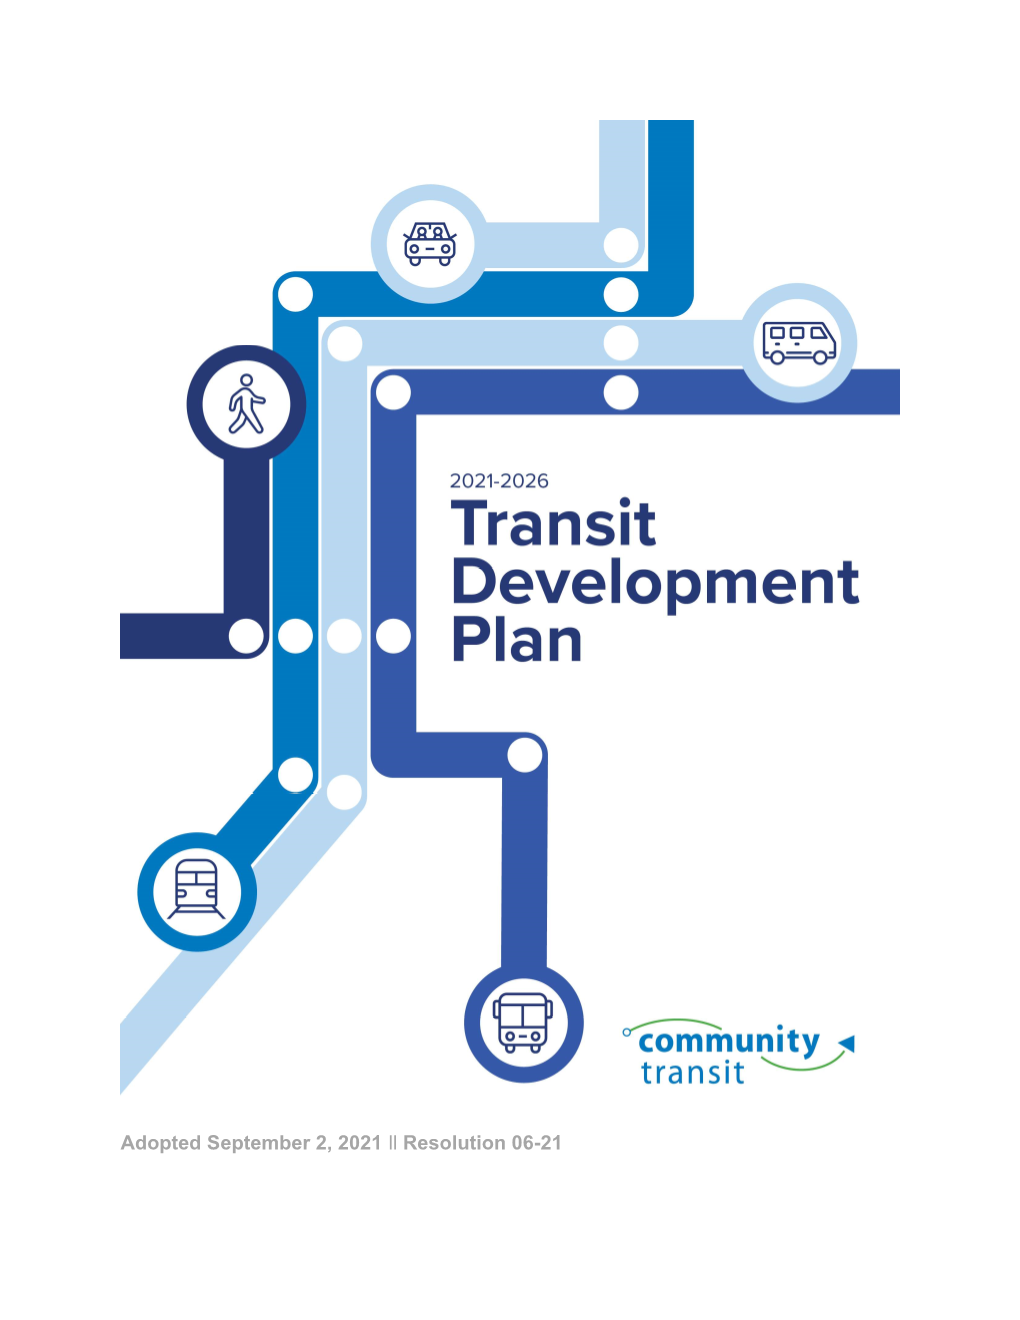 Community Transit's 2021-2026 Transit Development Plan (TDP)